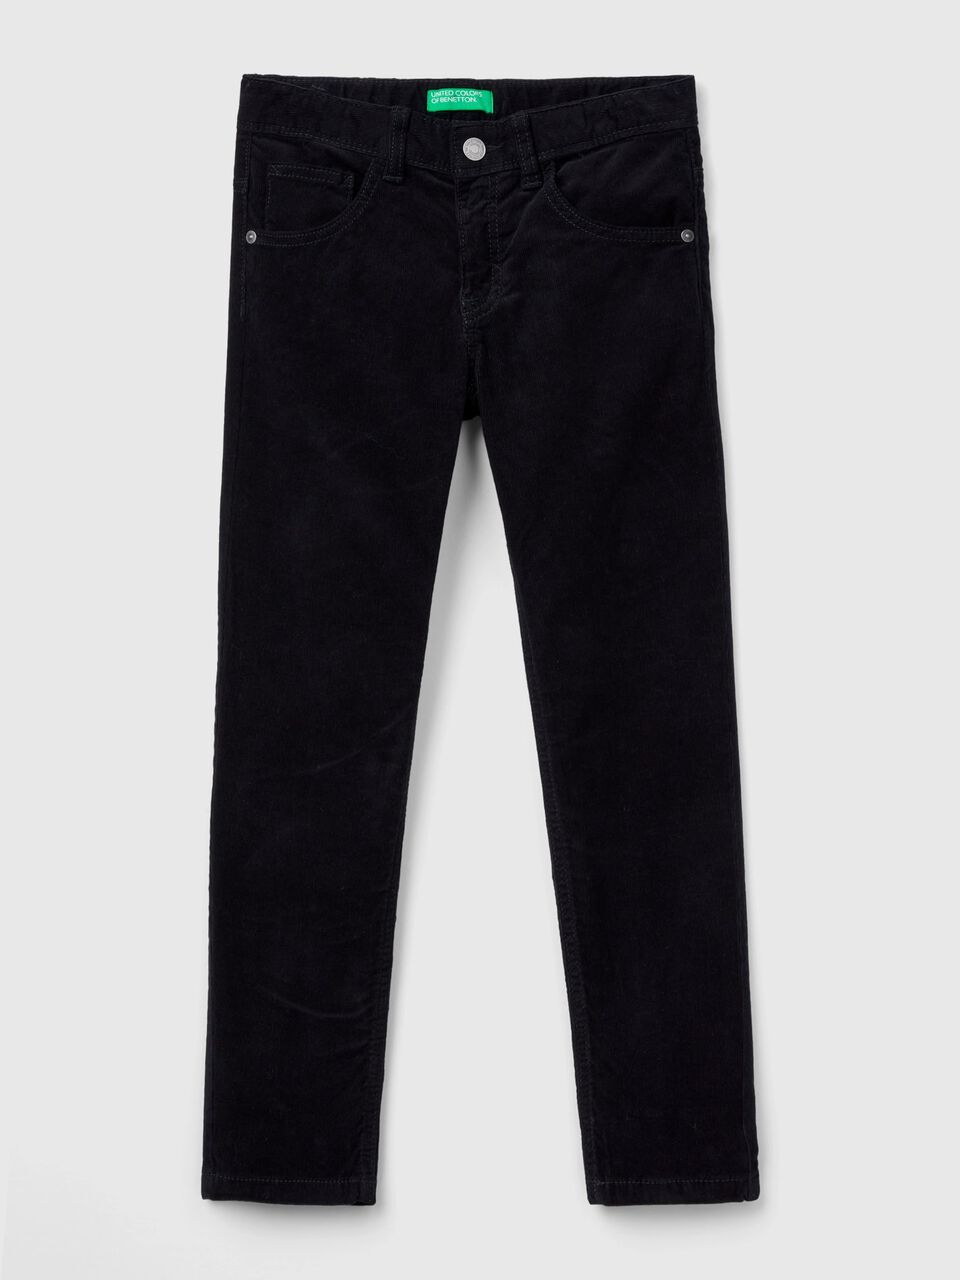 | corduroy stretch - Black trousers Benetton fit Slim